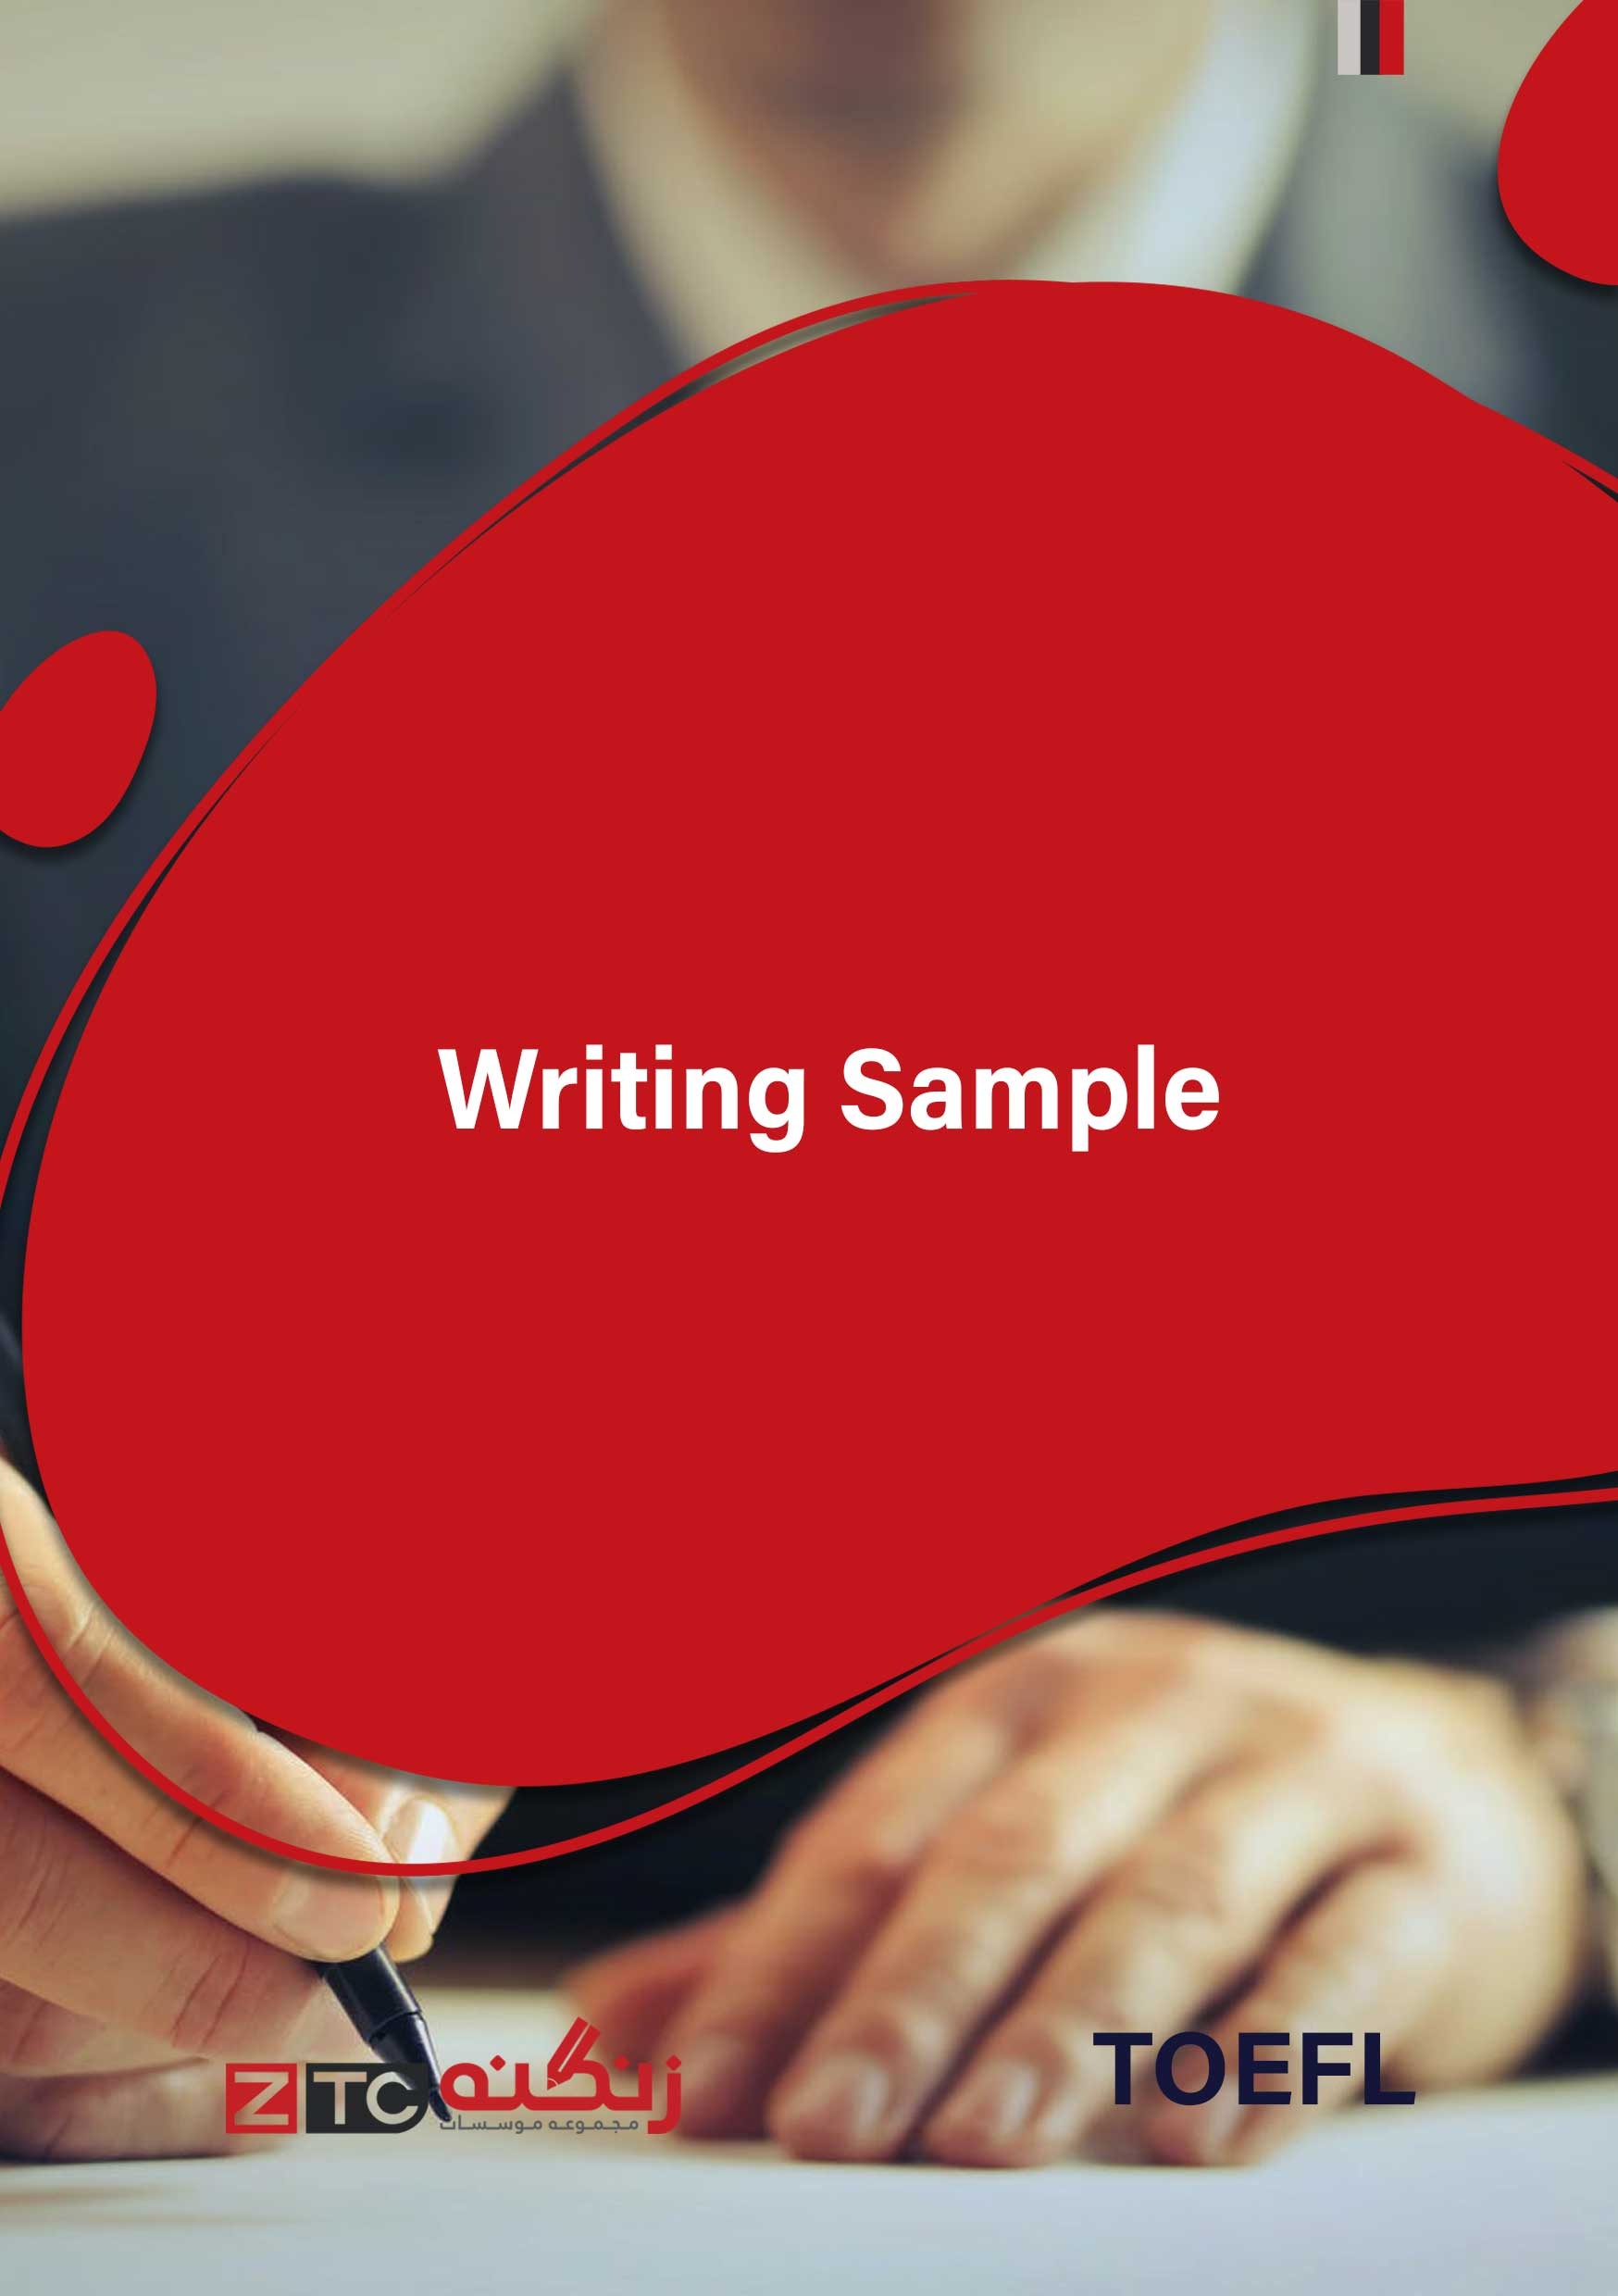 TOEFL Writing Sample